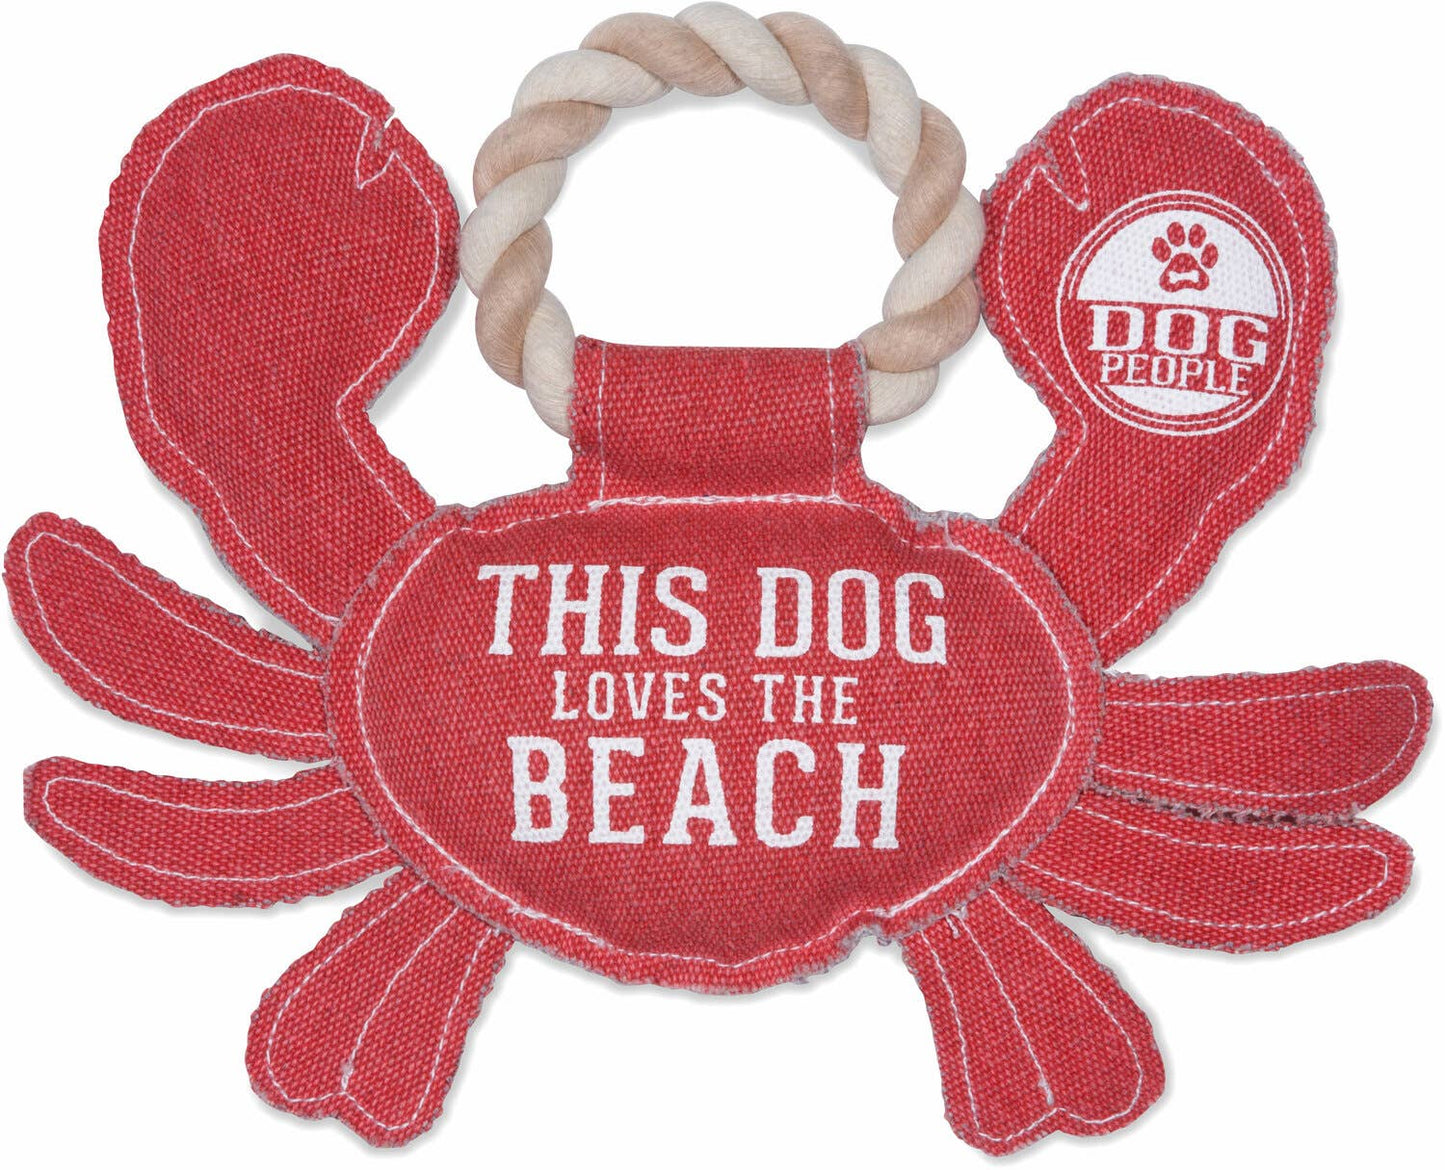 Beach Dog - 10.75" x 8" Canvas Dog Toy on Rope